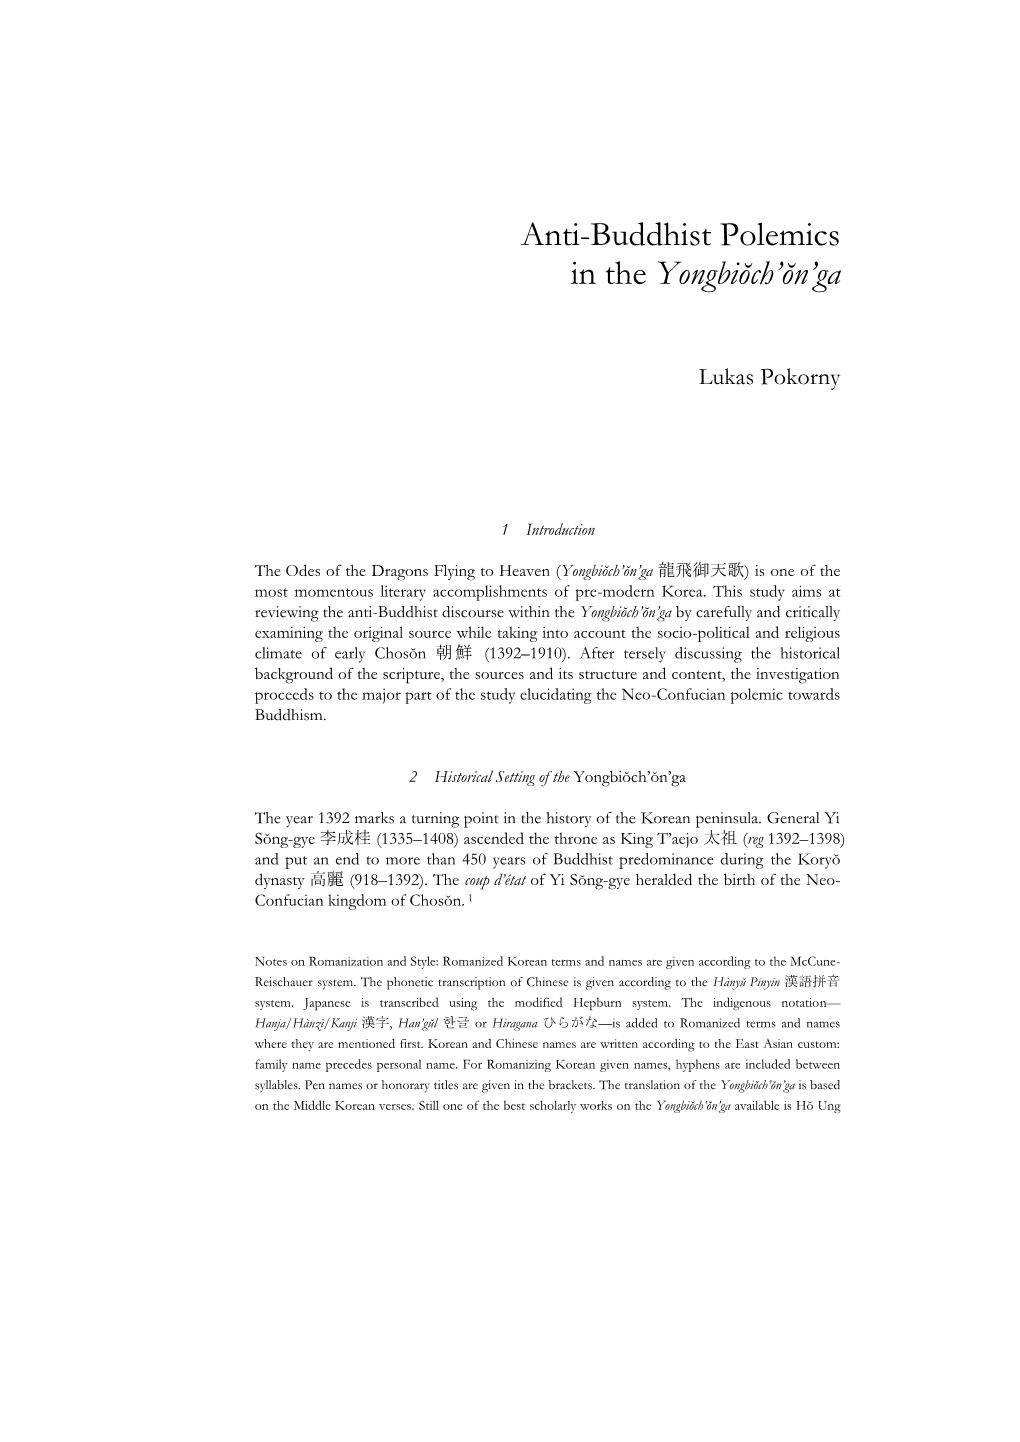 Anti-Buddhist Polemics in the Yongbiŏch'ŏn'ga